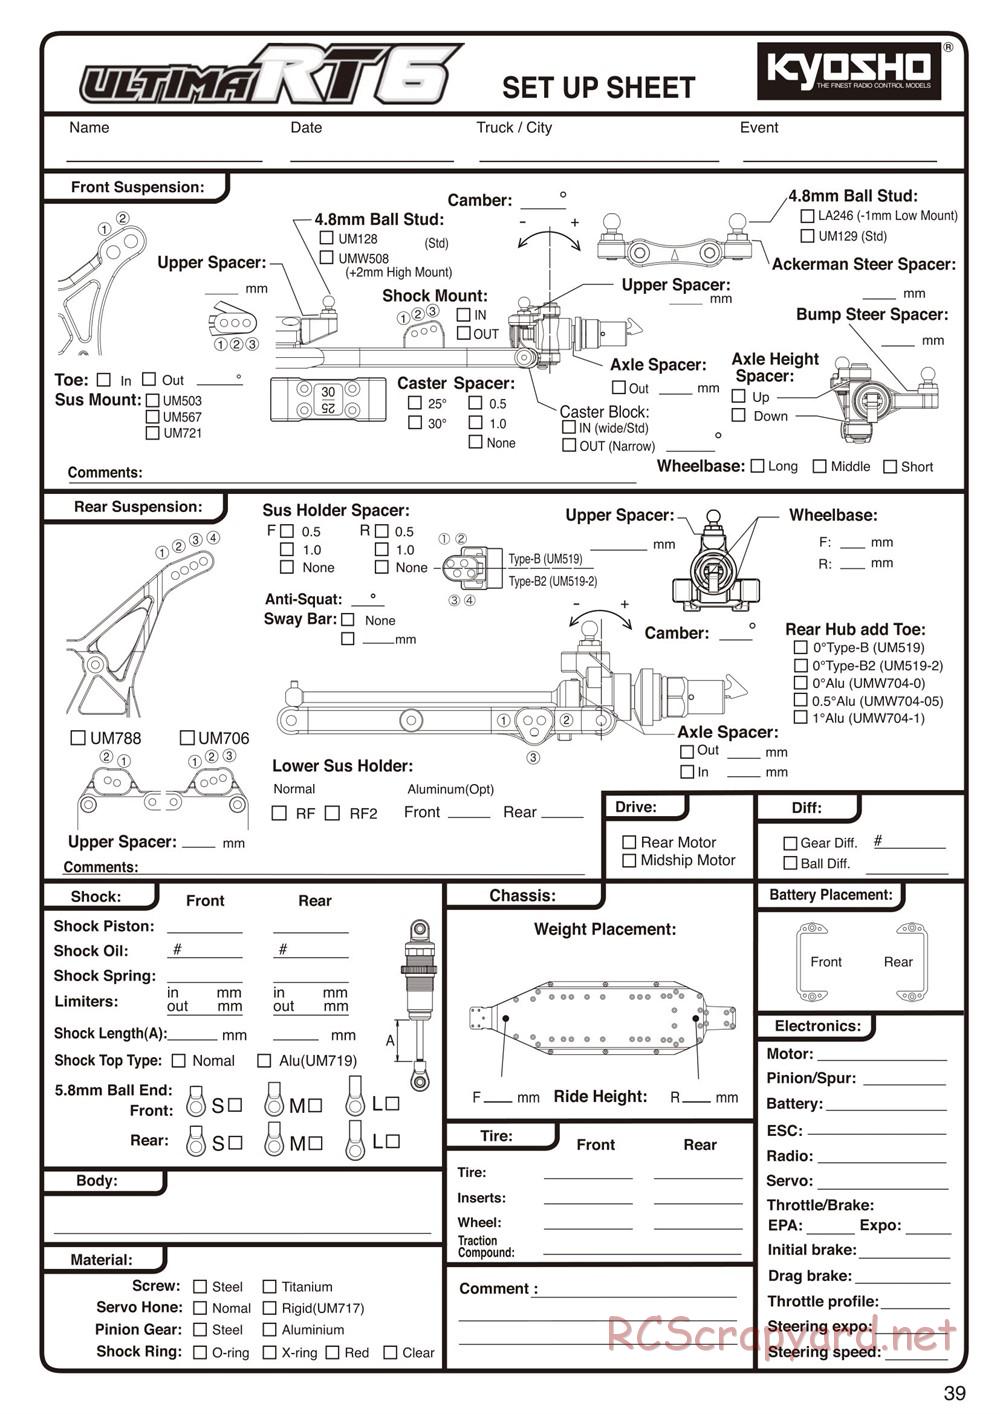 Kyosho - Ultima RT6 - Manual - Page 36